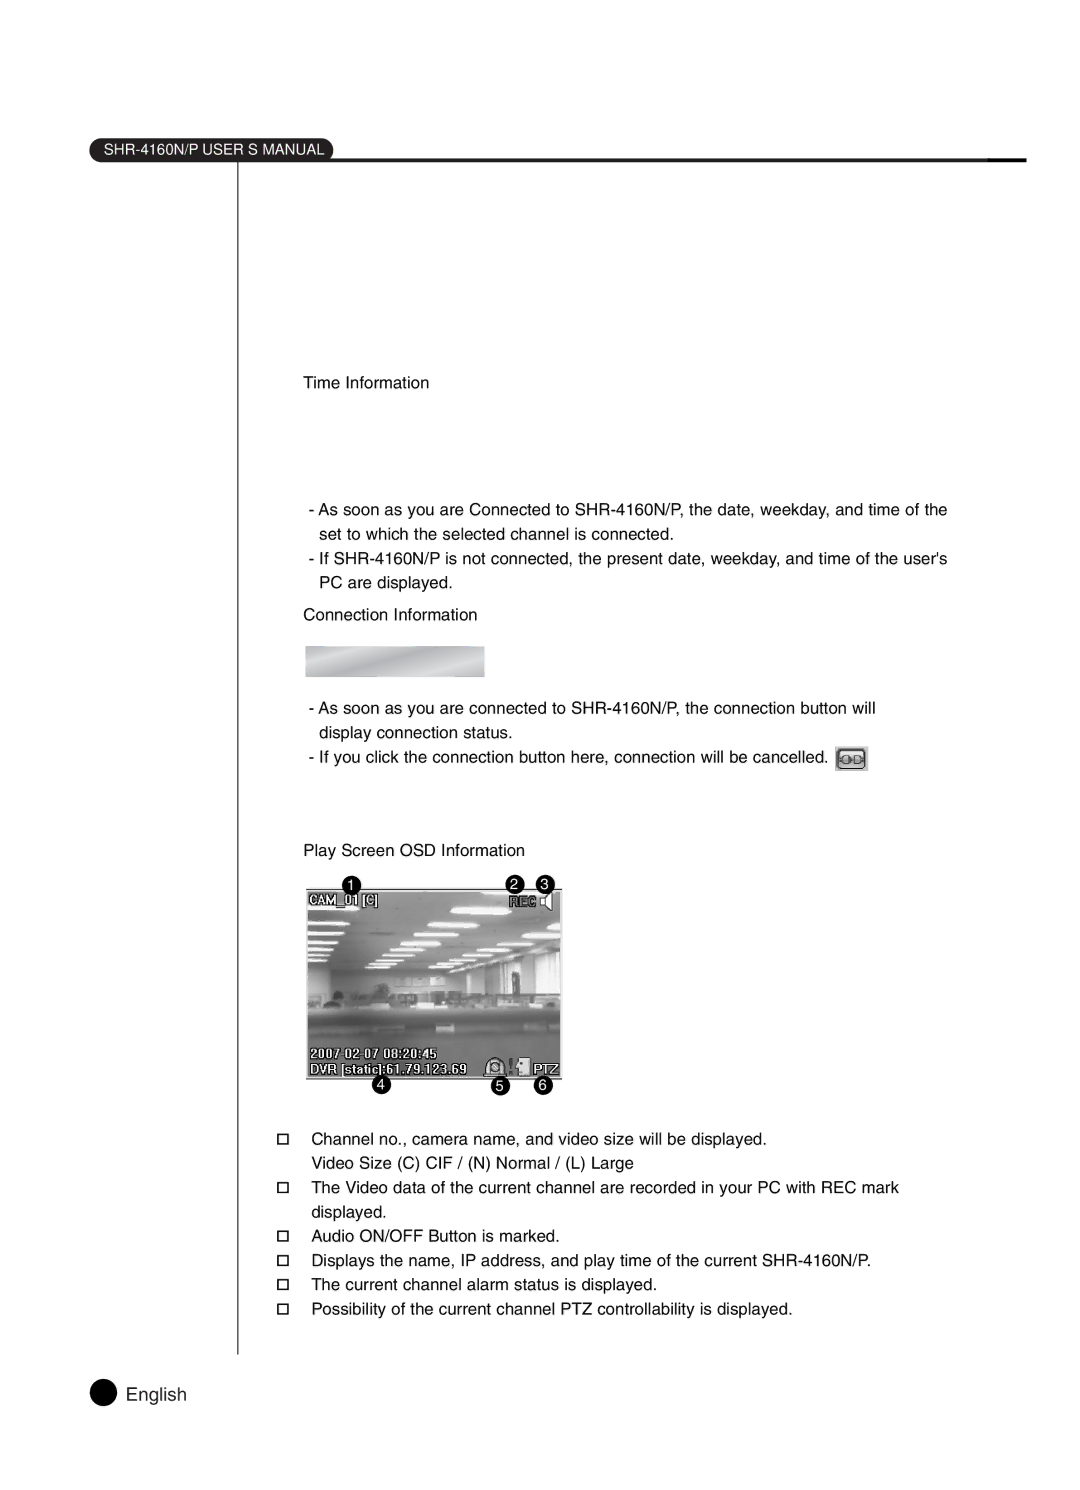 Samsung SHR-4160P manual 10-11English 